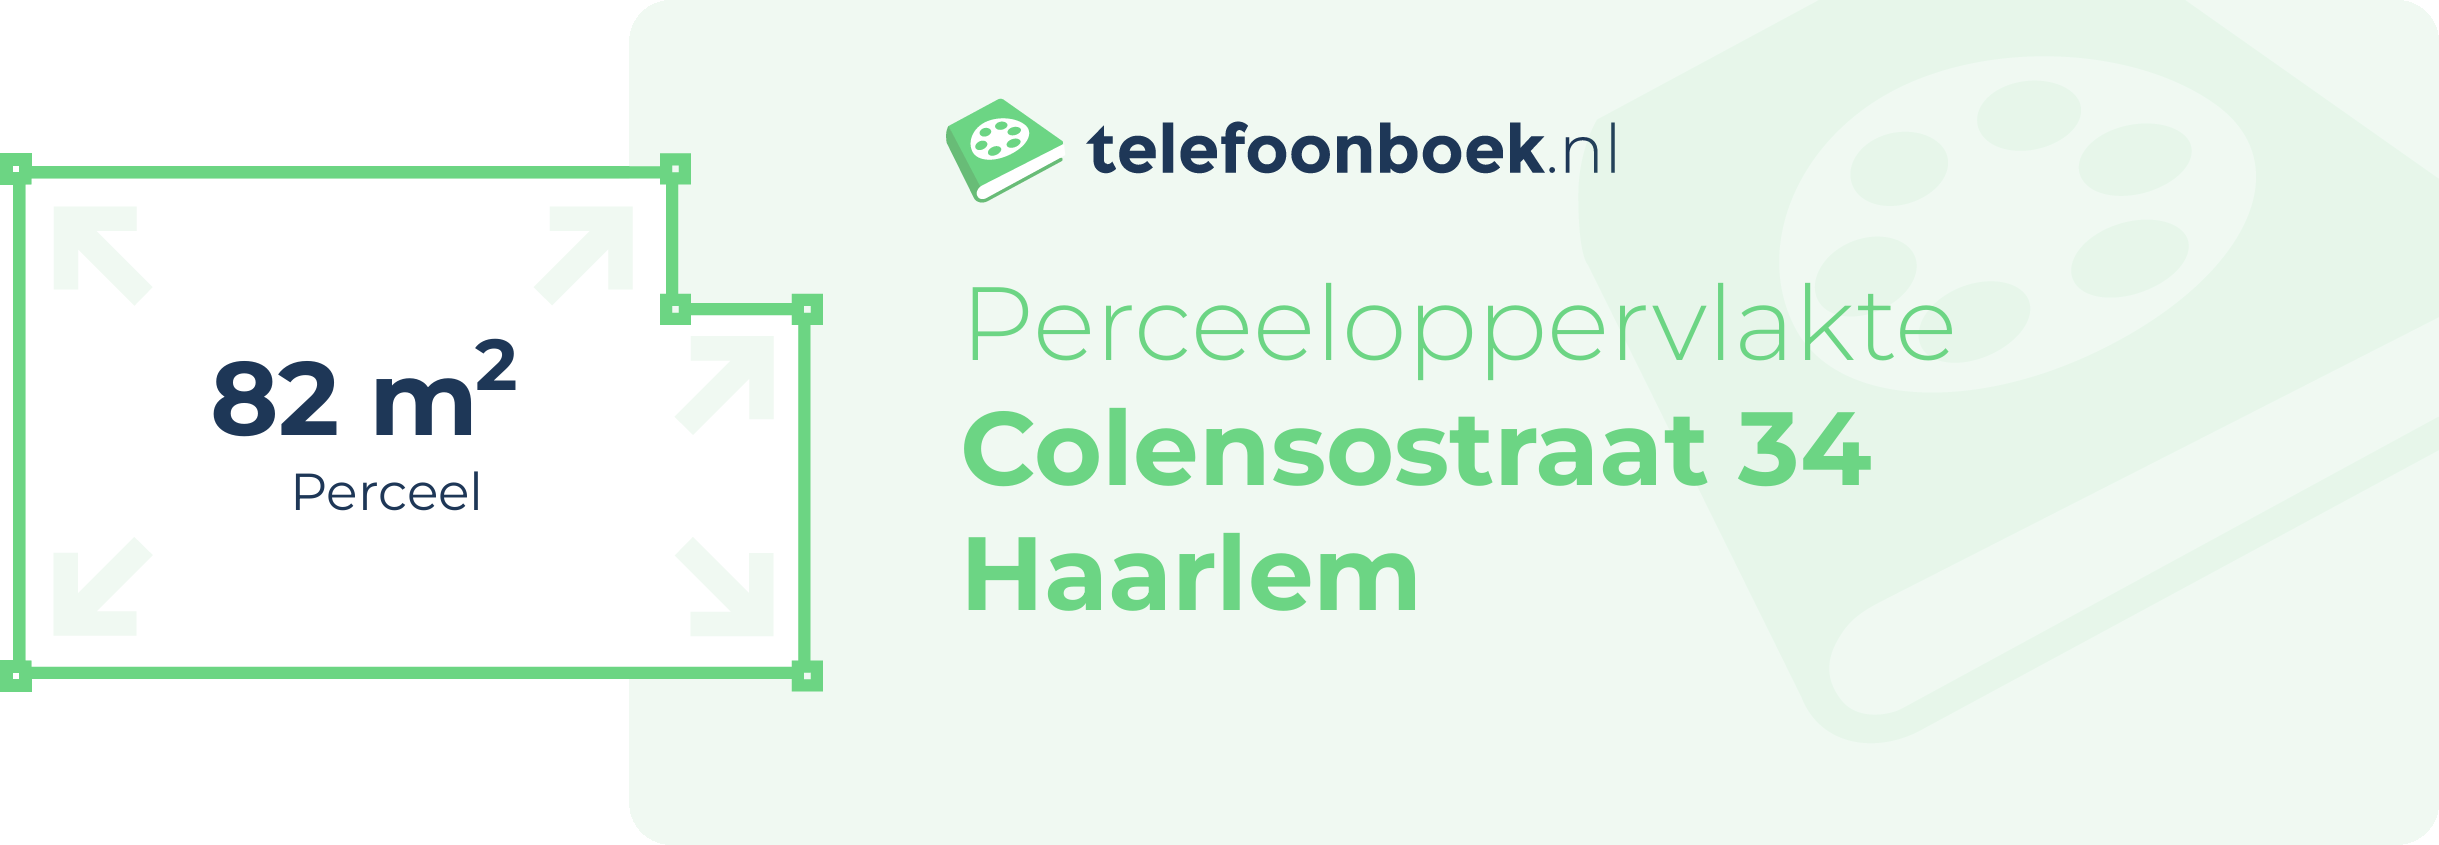 Perceeloppervlakte Colensostraat 34 Haarlem